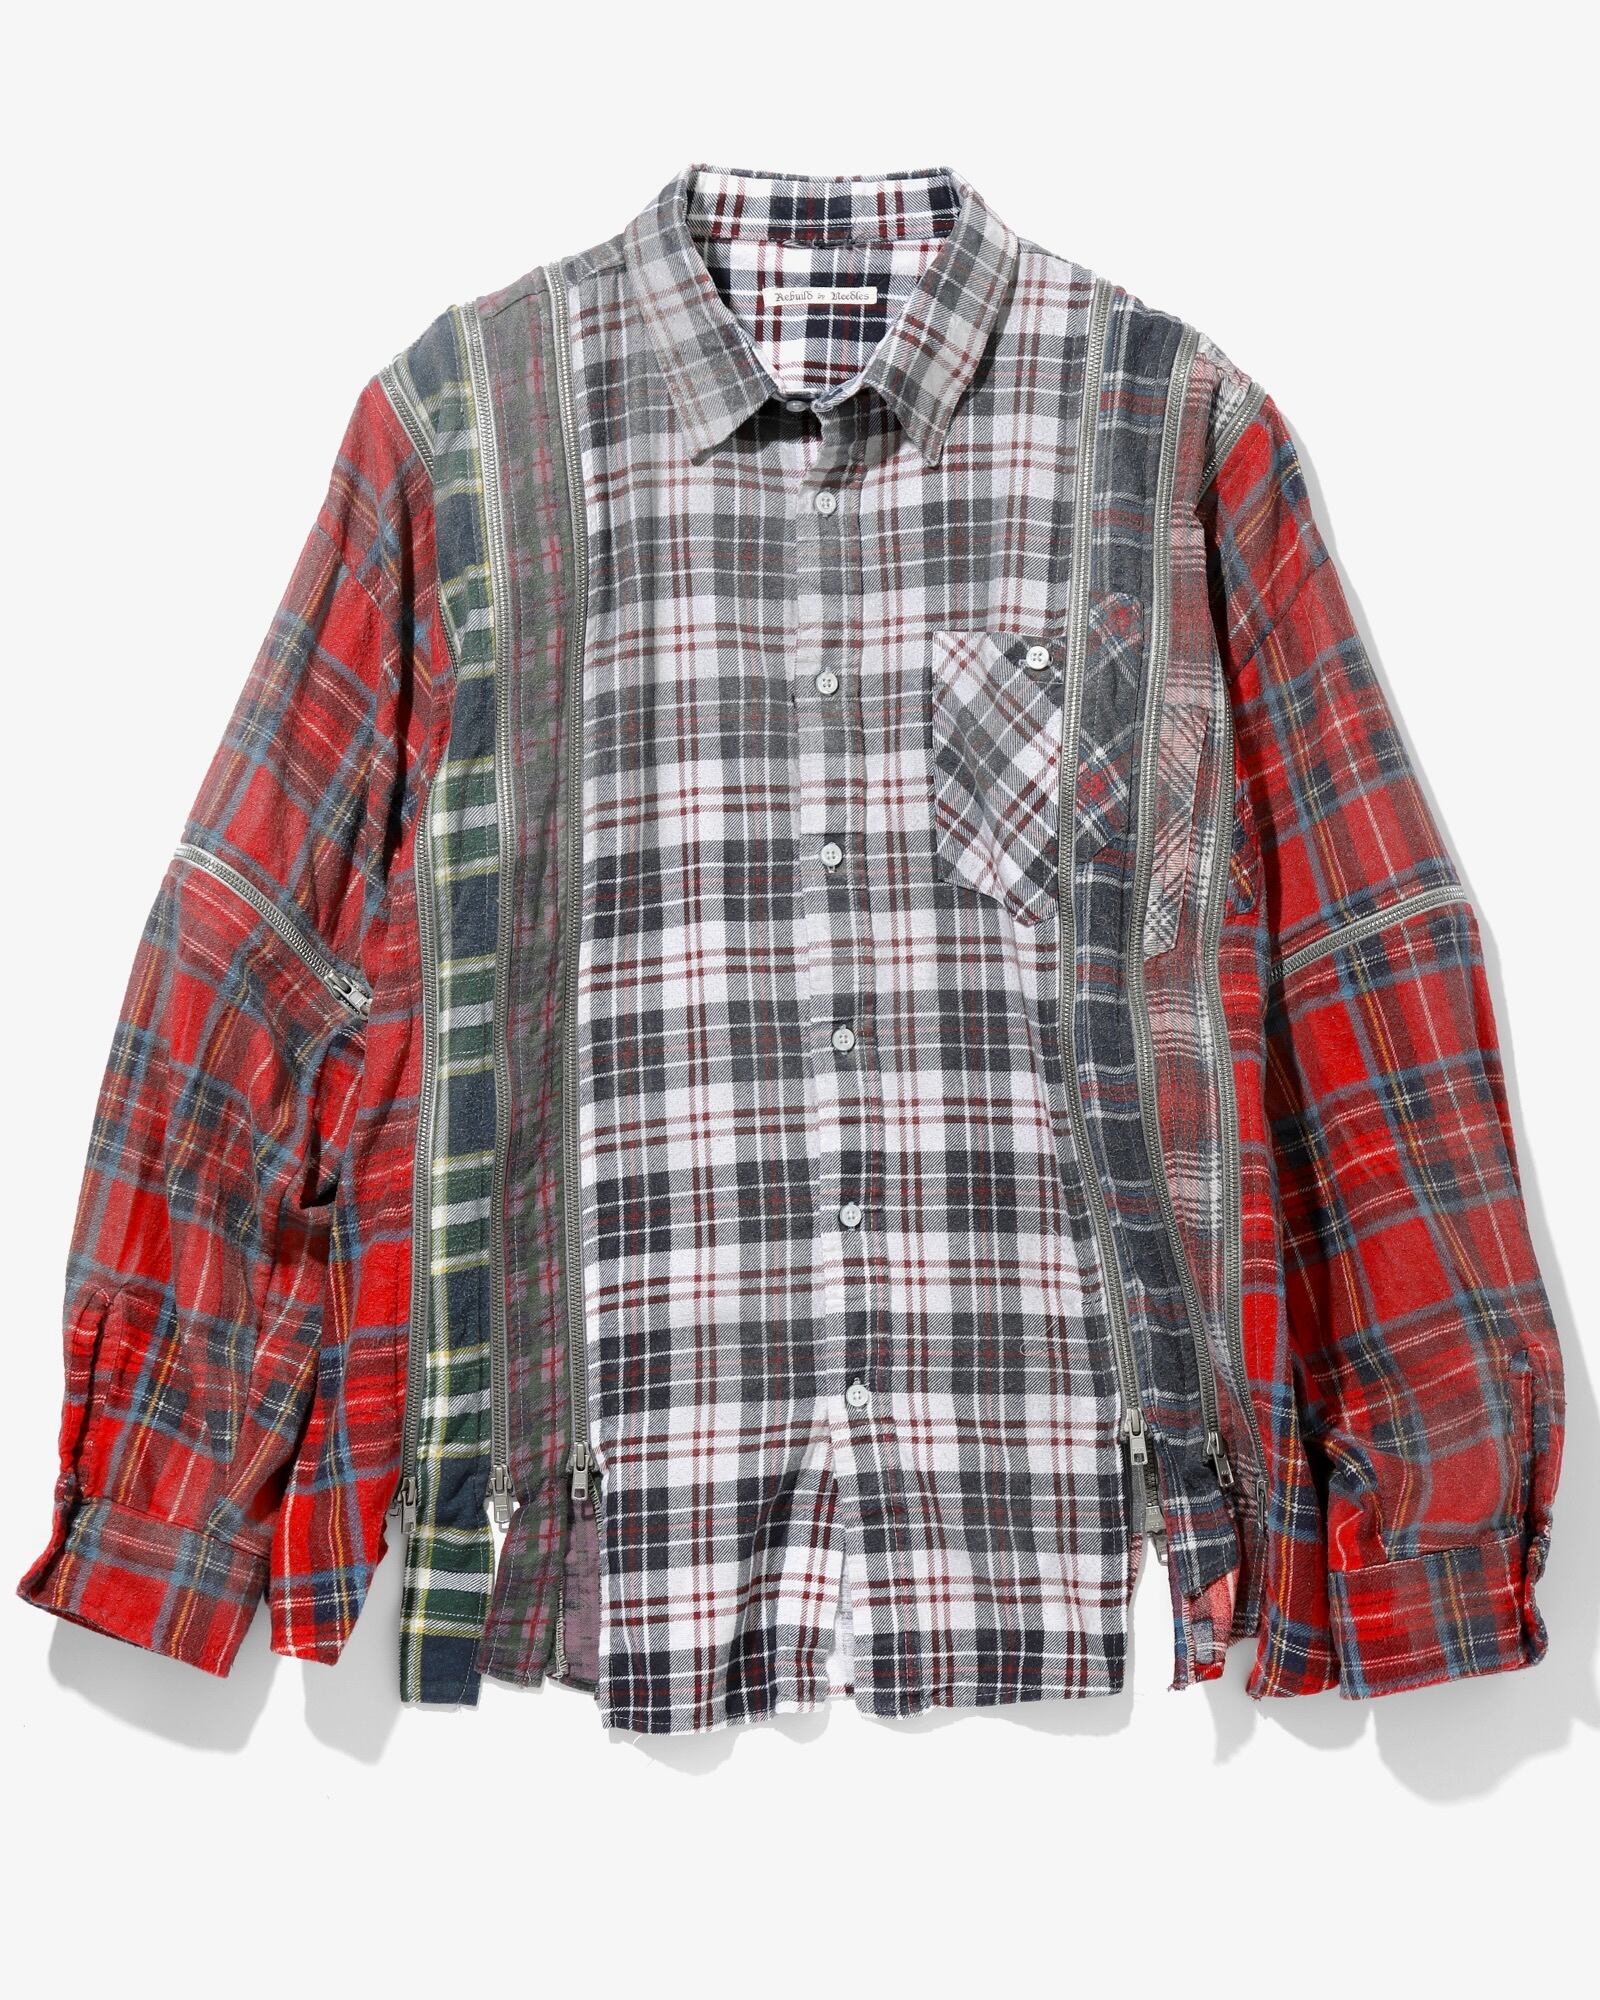 10,865円rebuildbyneedles 7Cuts Zipped Wide Shirt